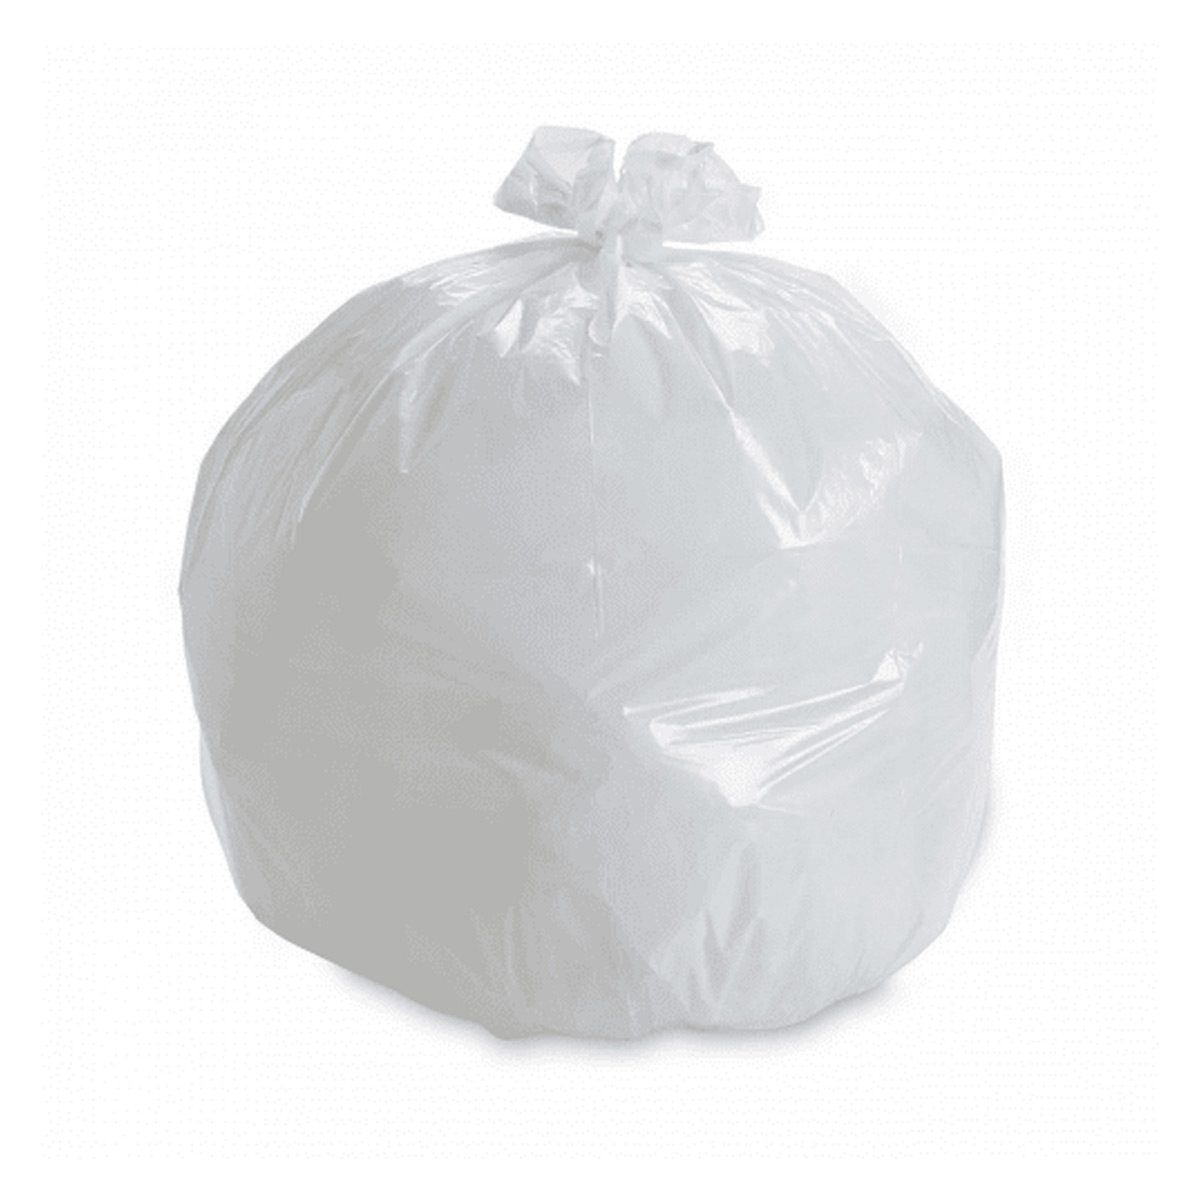 bins-bin-liners-bags-white-bin-liner-with-tear-top-60L-litre-tot-bin-liners-50-bags-per-pack-vjs-distributors-T403750W